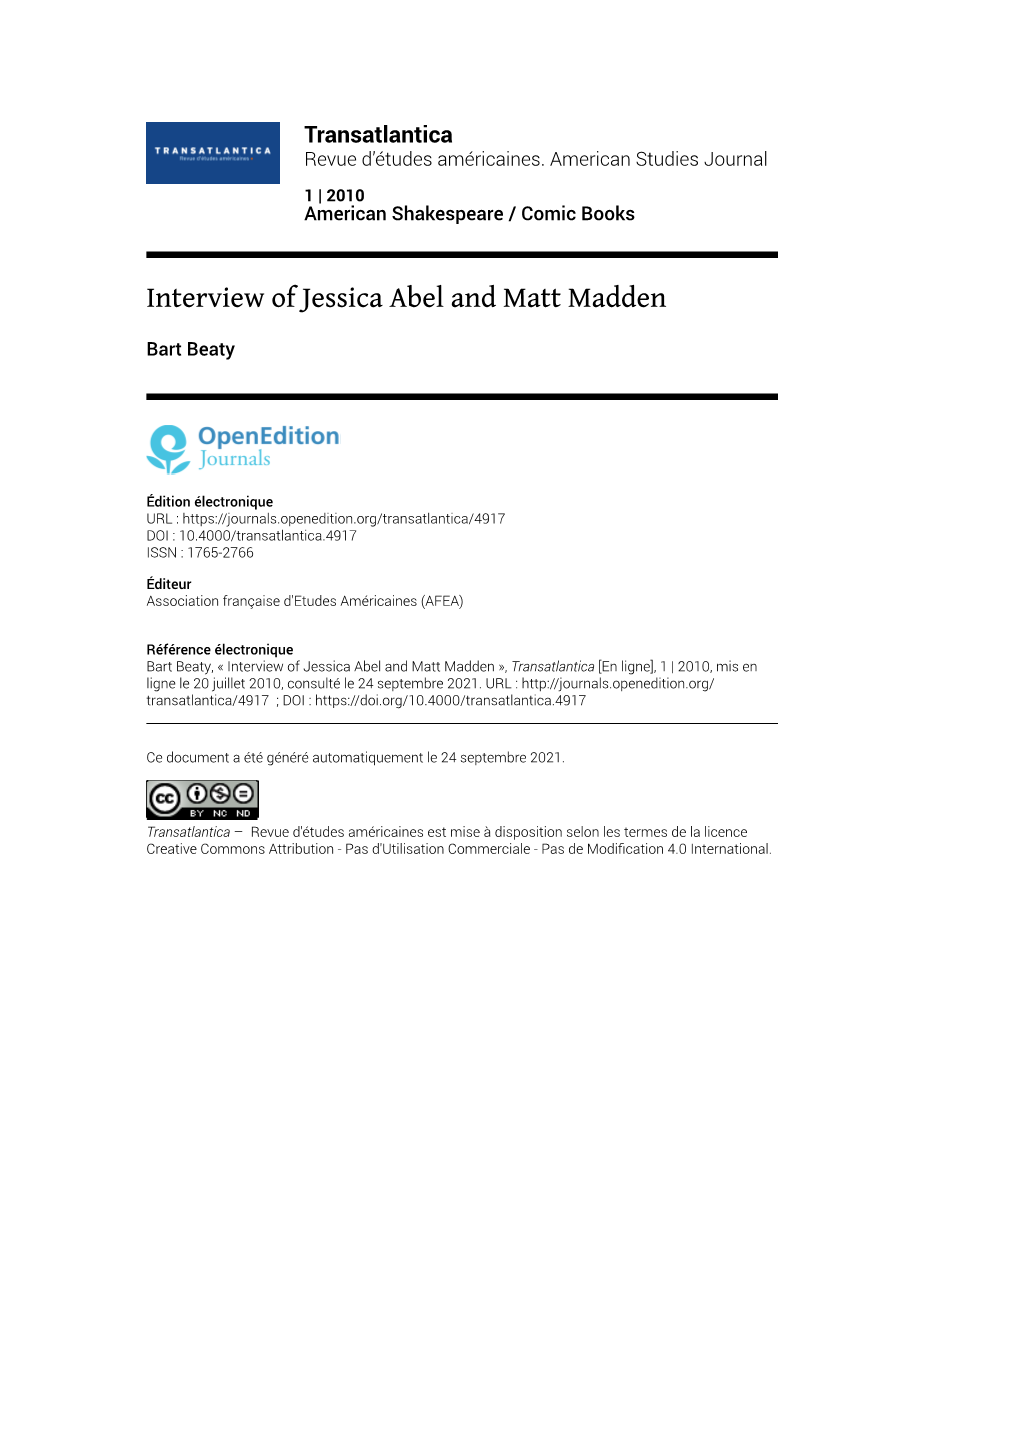 Transatlantica, 1 | 2010 Interview of Jessica Abel and Matt Madden 2